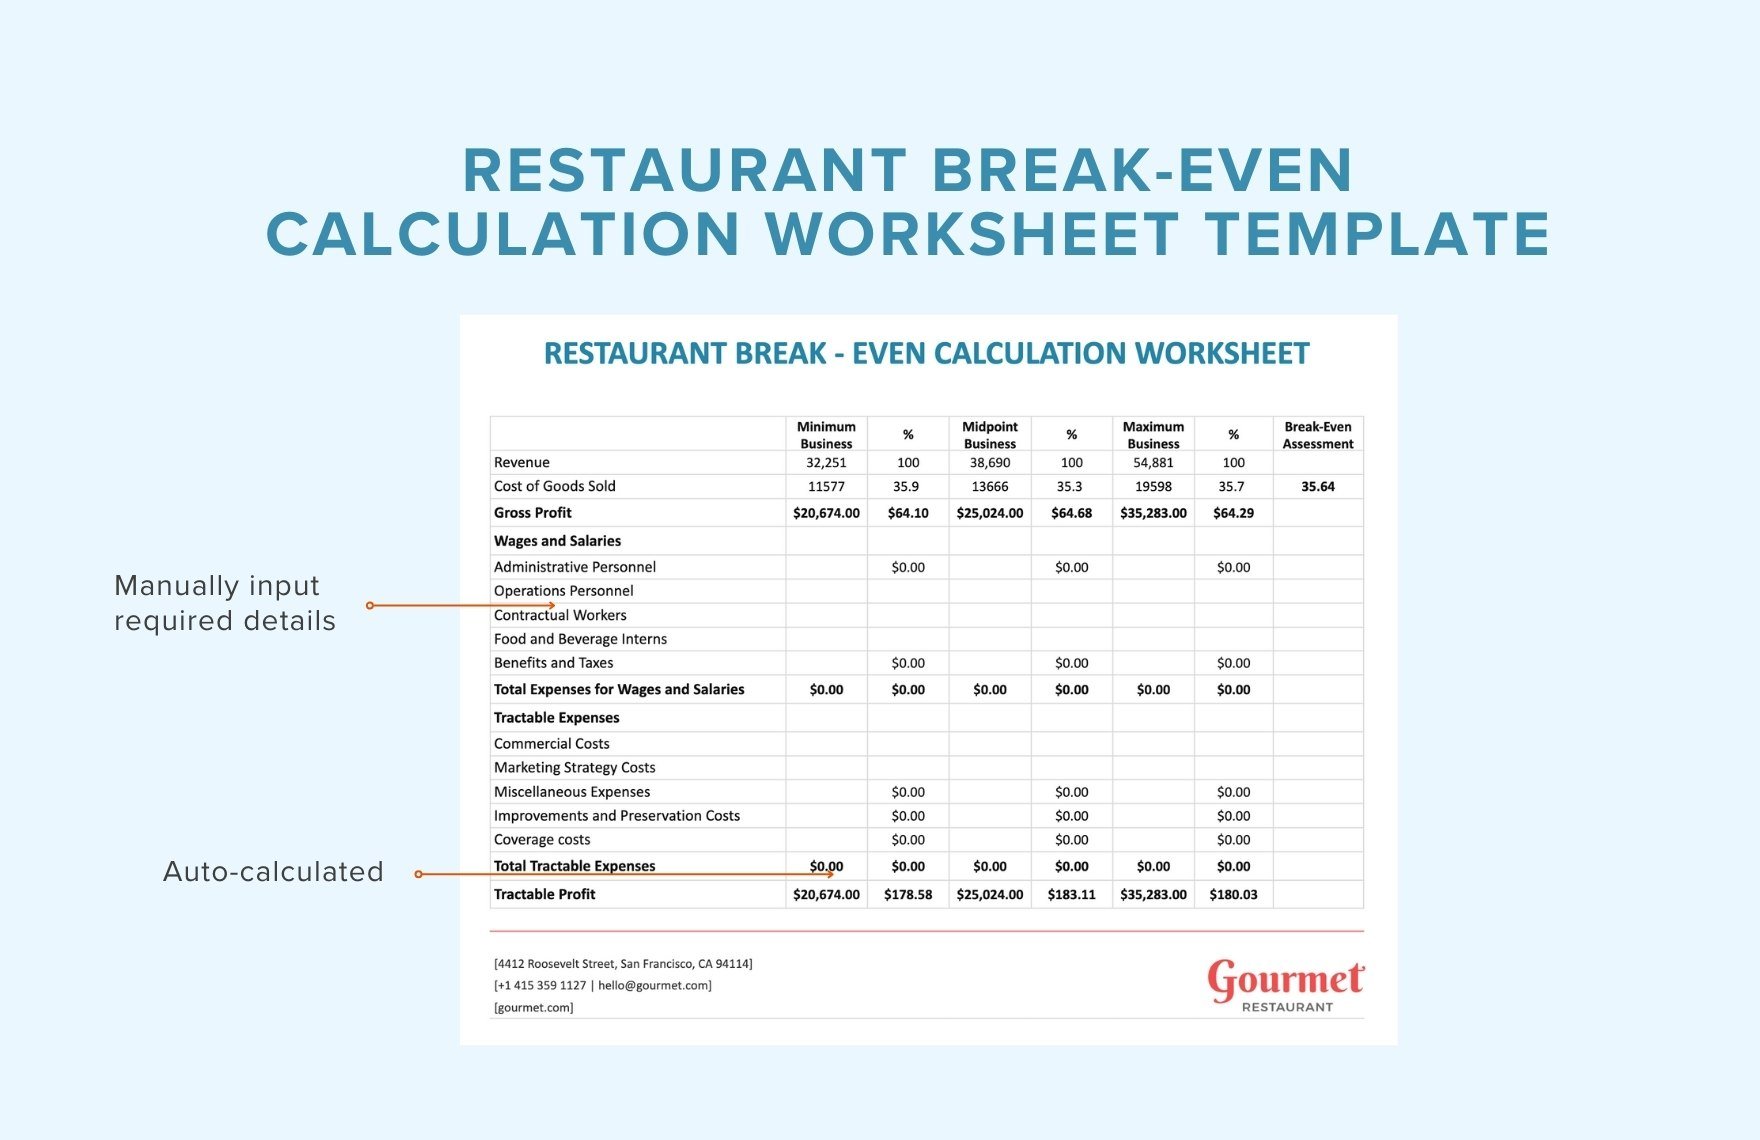 Restaurant Break-Even Calculation Worksheet Template